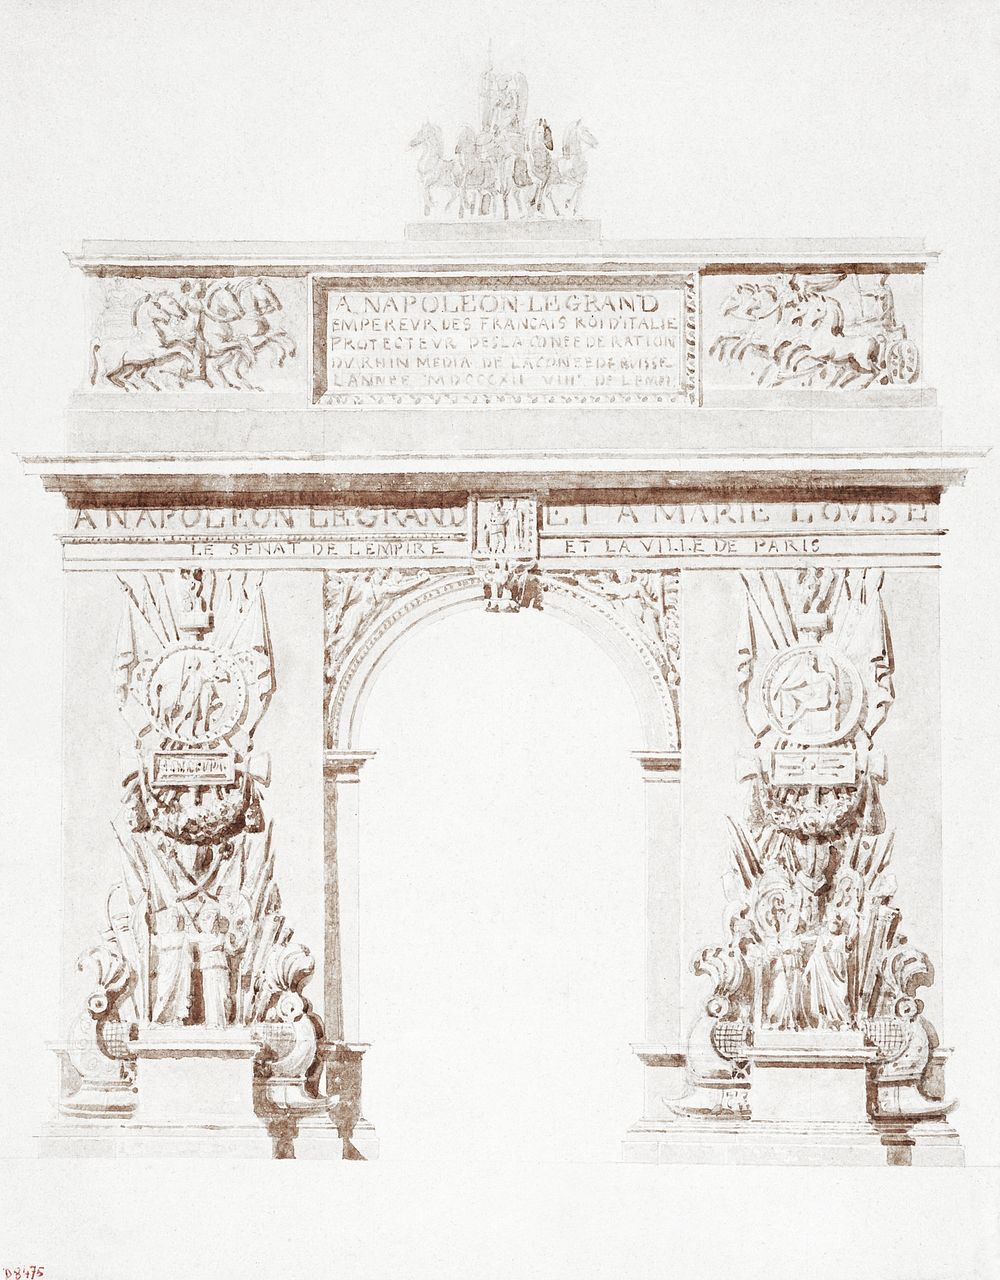 Arc de Triomphe. Original from the Smithsonian. Digitally enhanced by rawpixel.